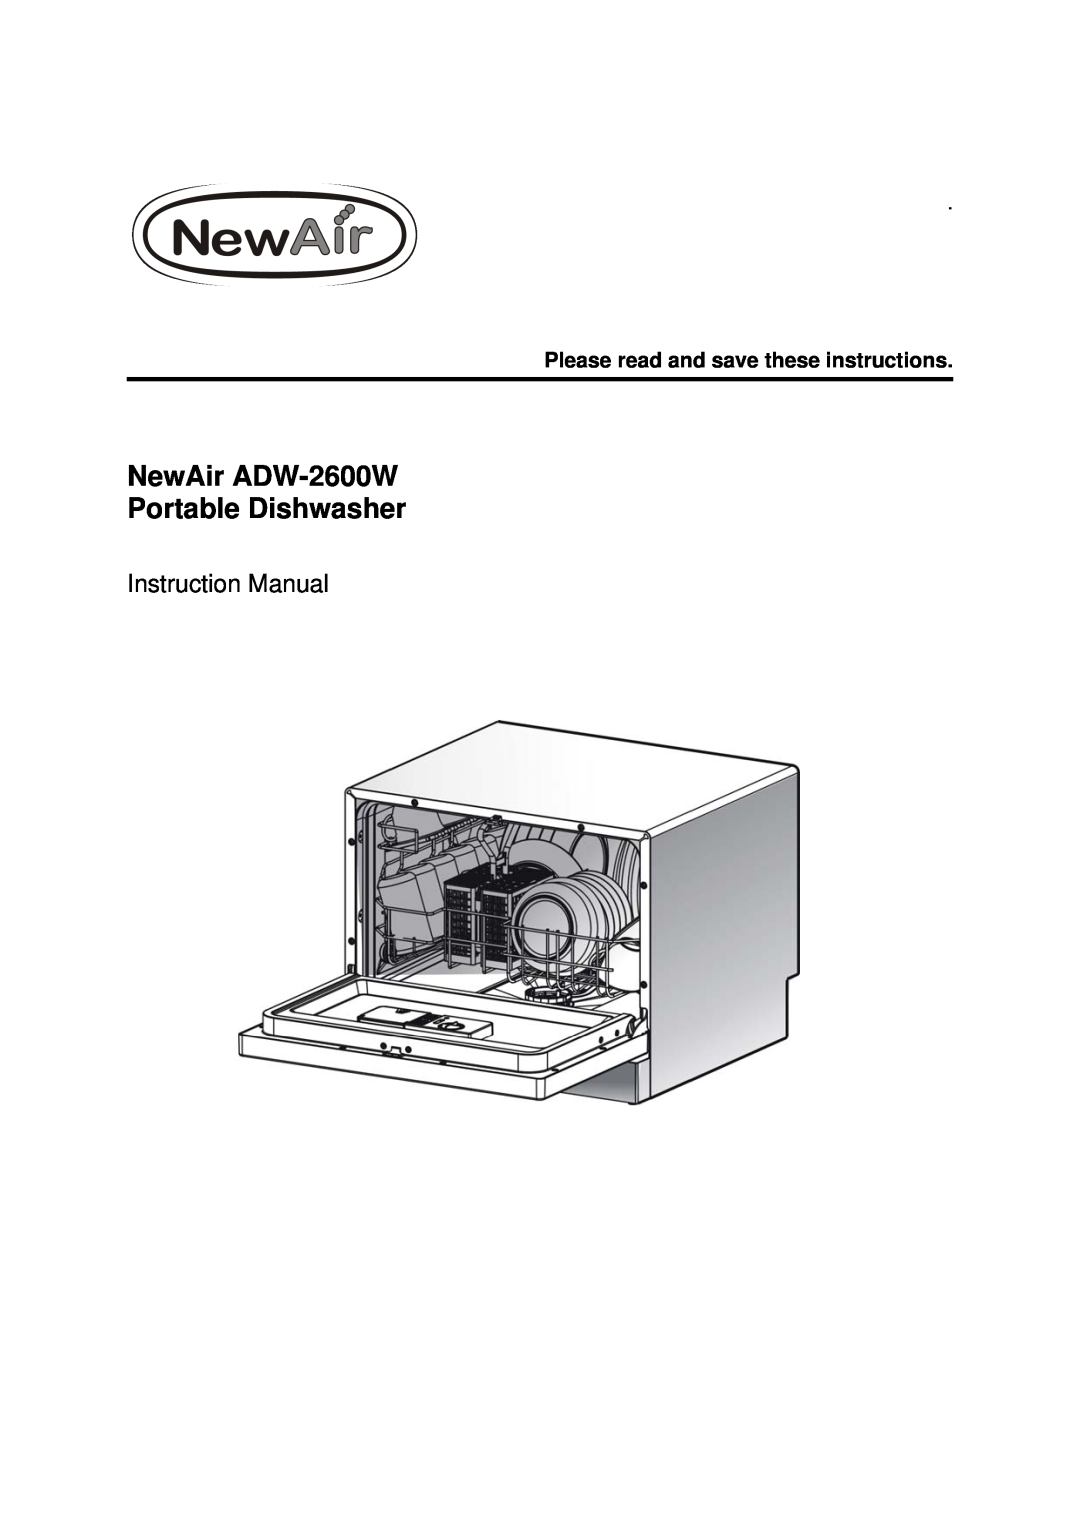 NewAir instruction manual NewAir ADW-2600W Portable Dishwasher, Instruction Manual 